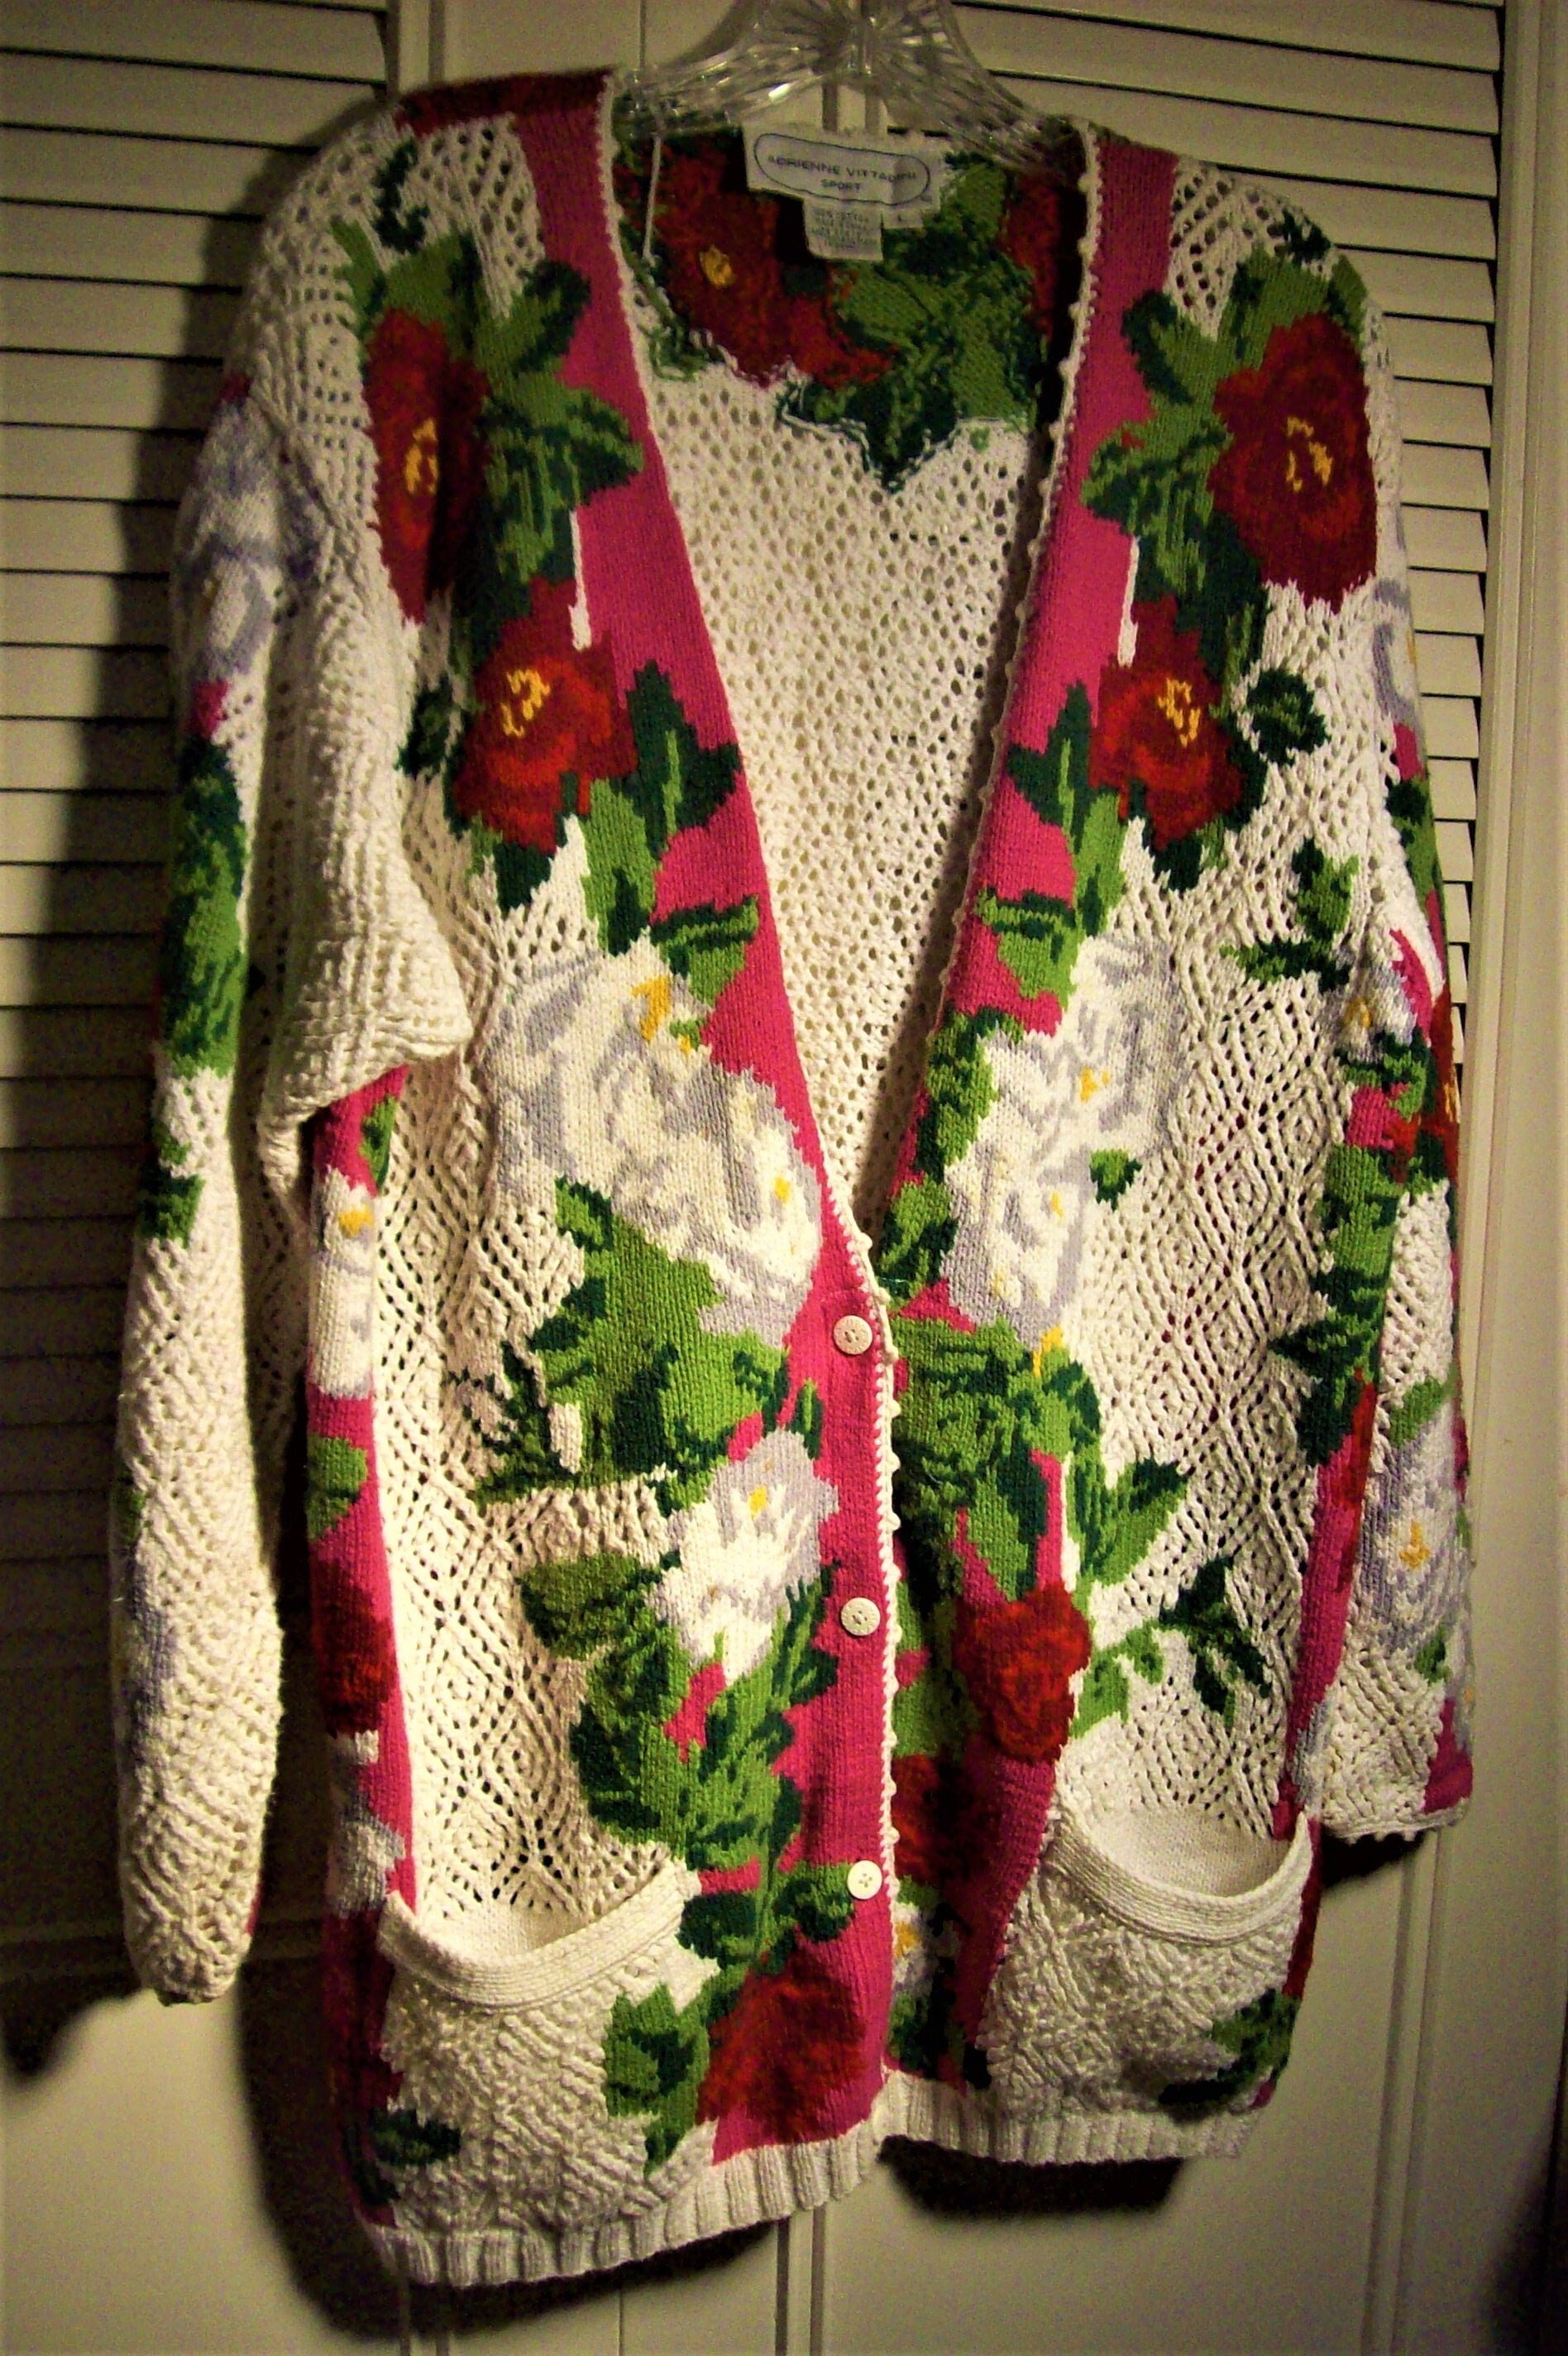 1990s Adrienne Vittadini Long Cotton Pullover (Fits M/L)